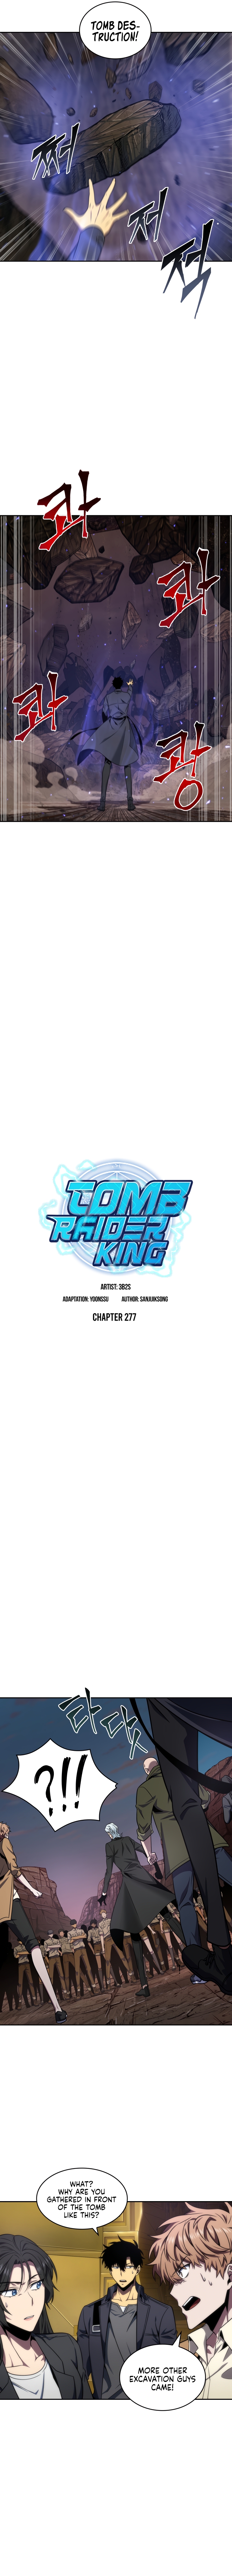 Tomb Raider King - Page 3